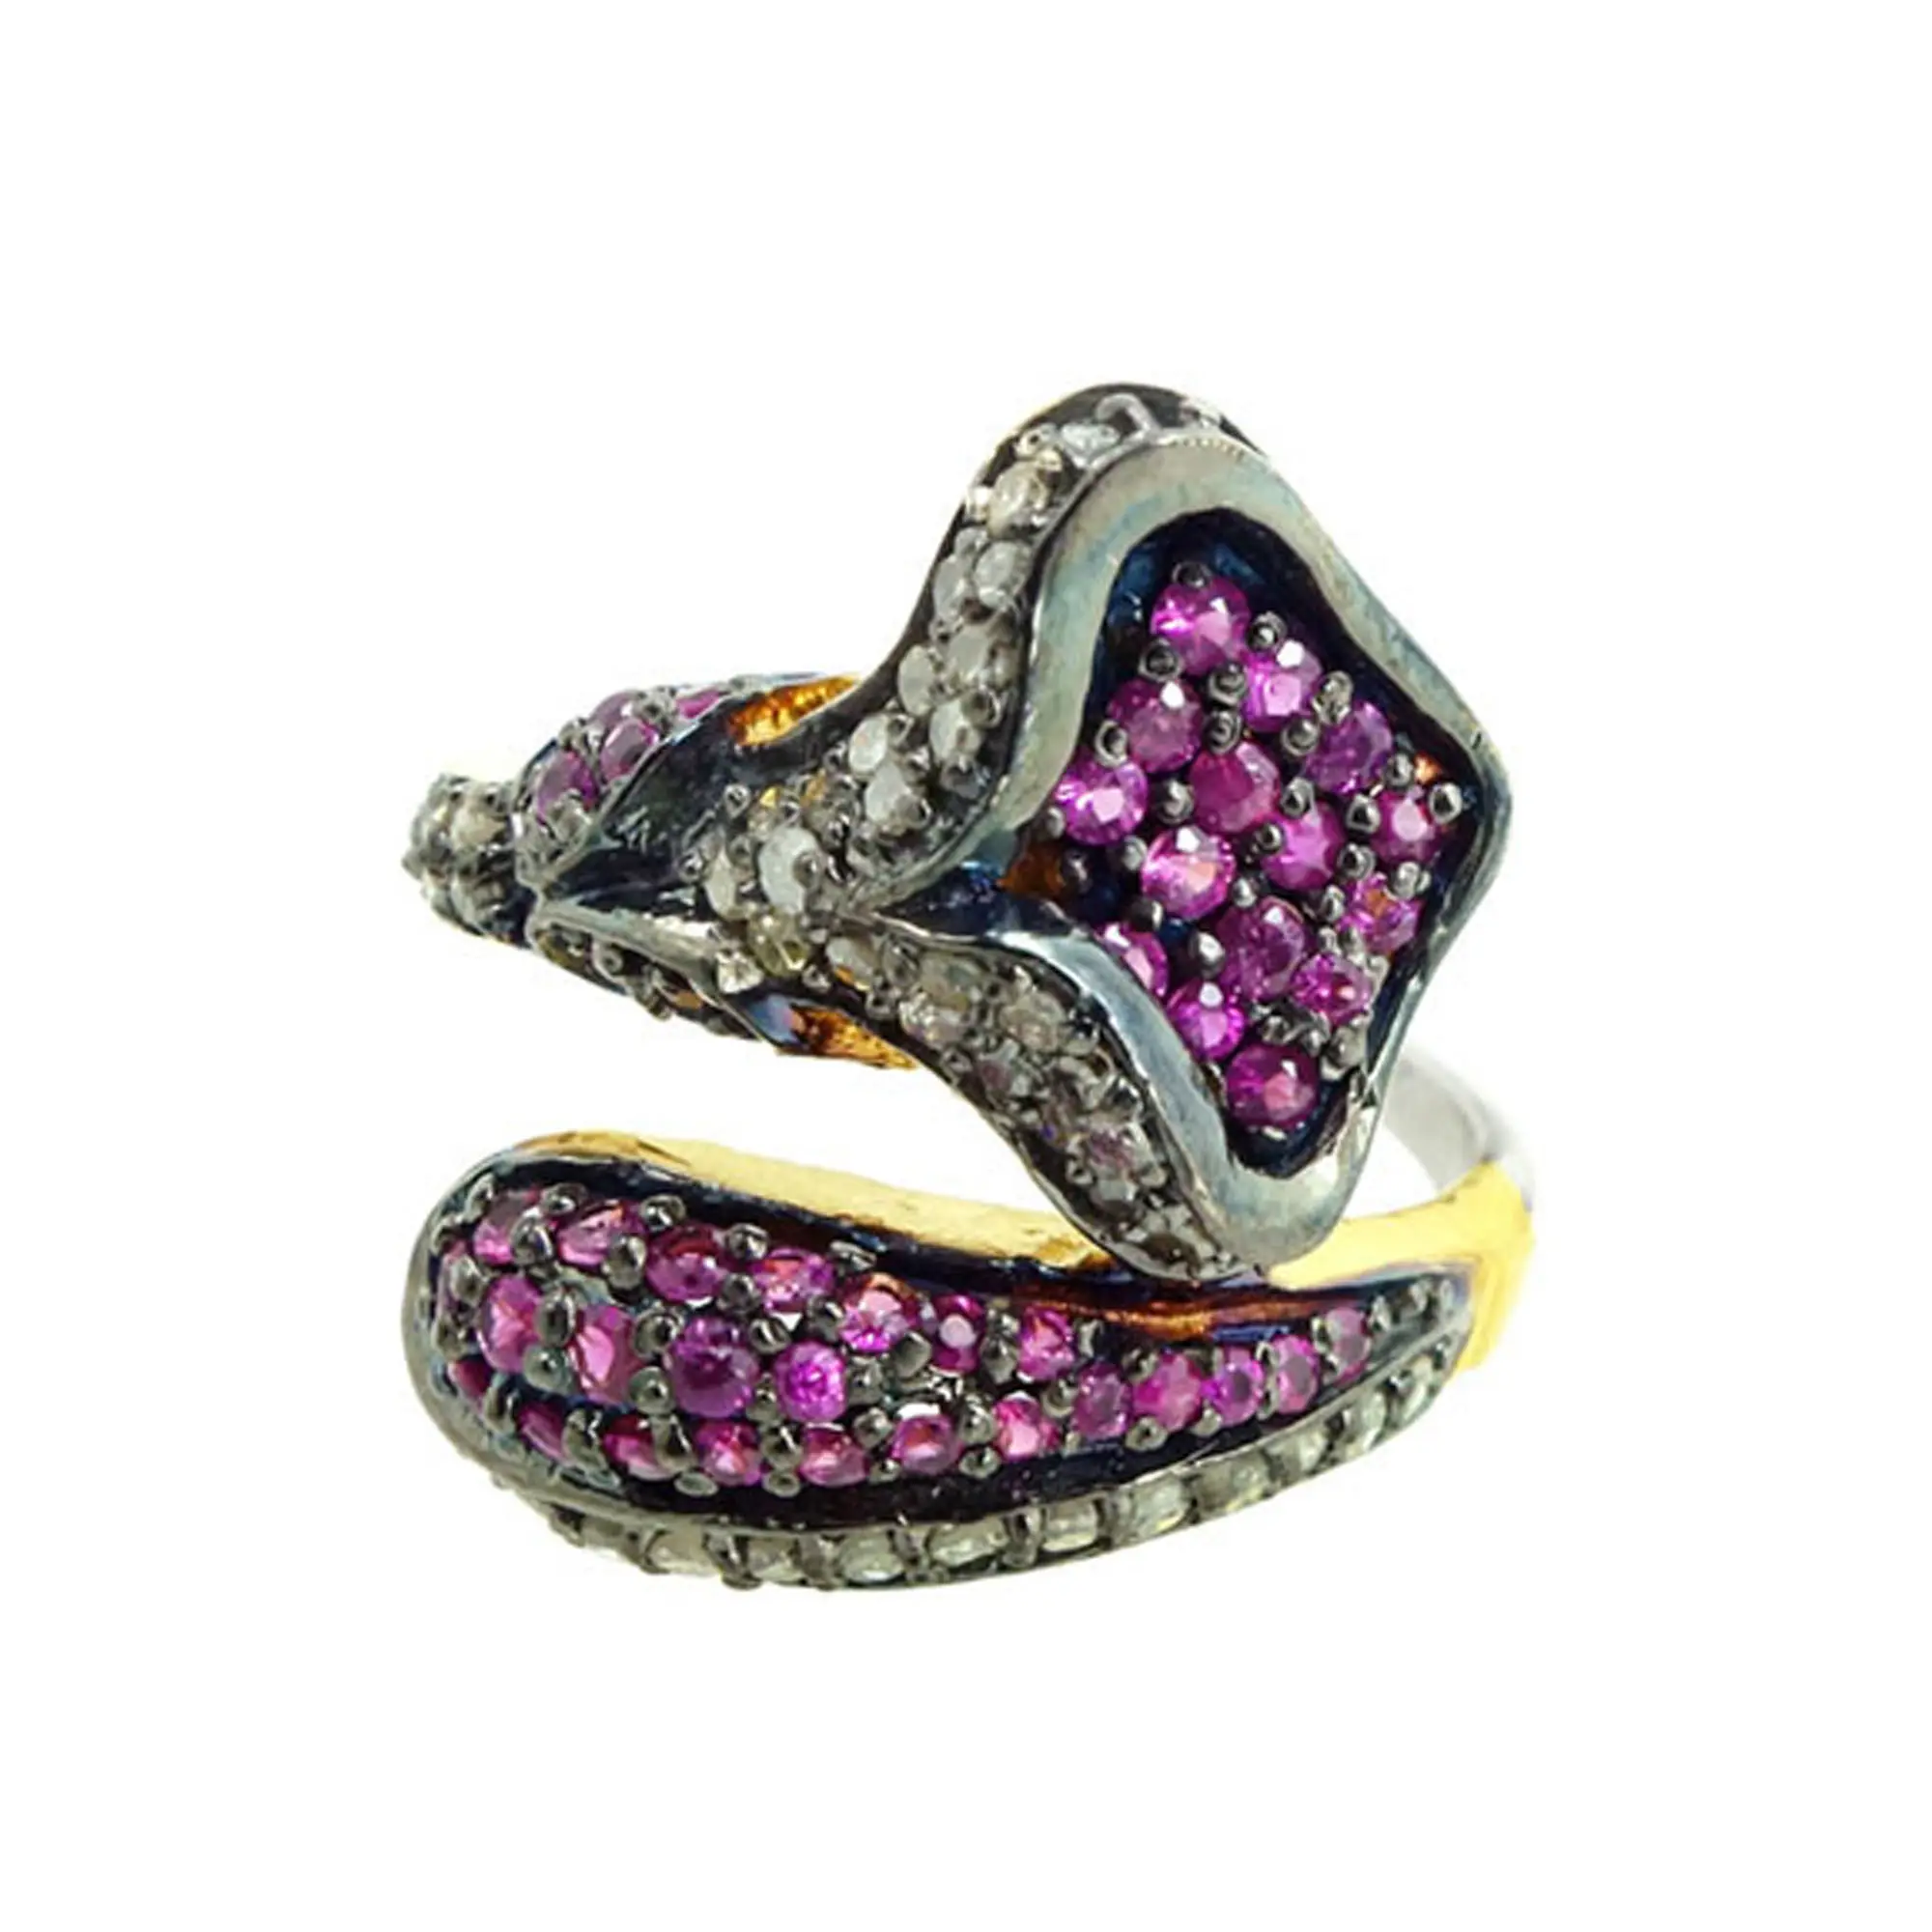 Anillo con diseño de serpiente de oro amarillo de 14k, anillo de Plata de Ley 925 con piedras preciosas, diamante Natural, rubí, joyería fina